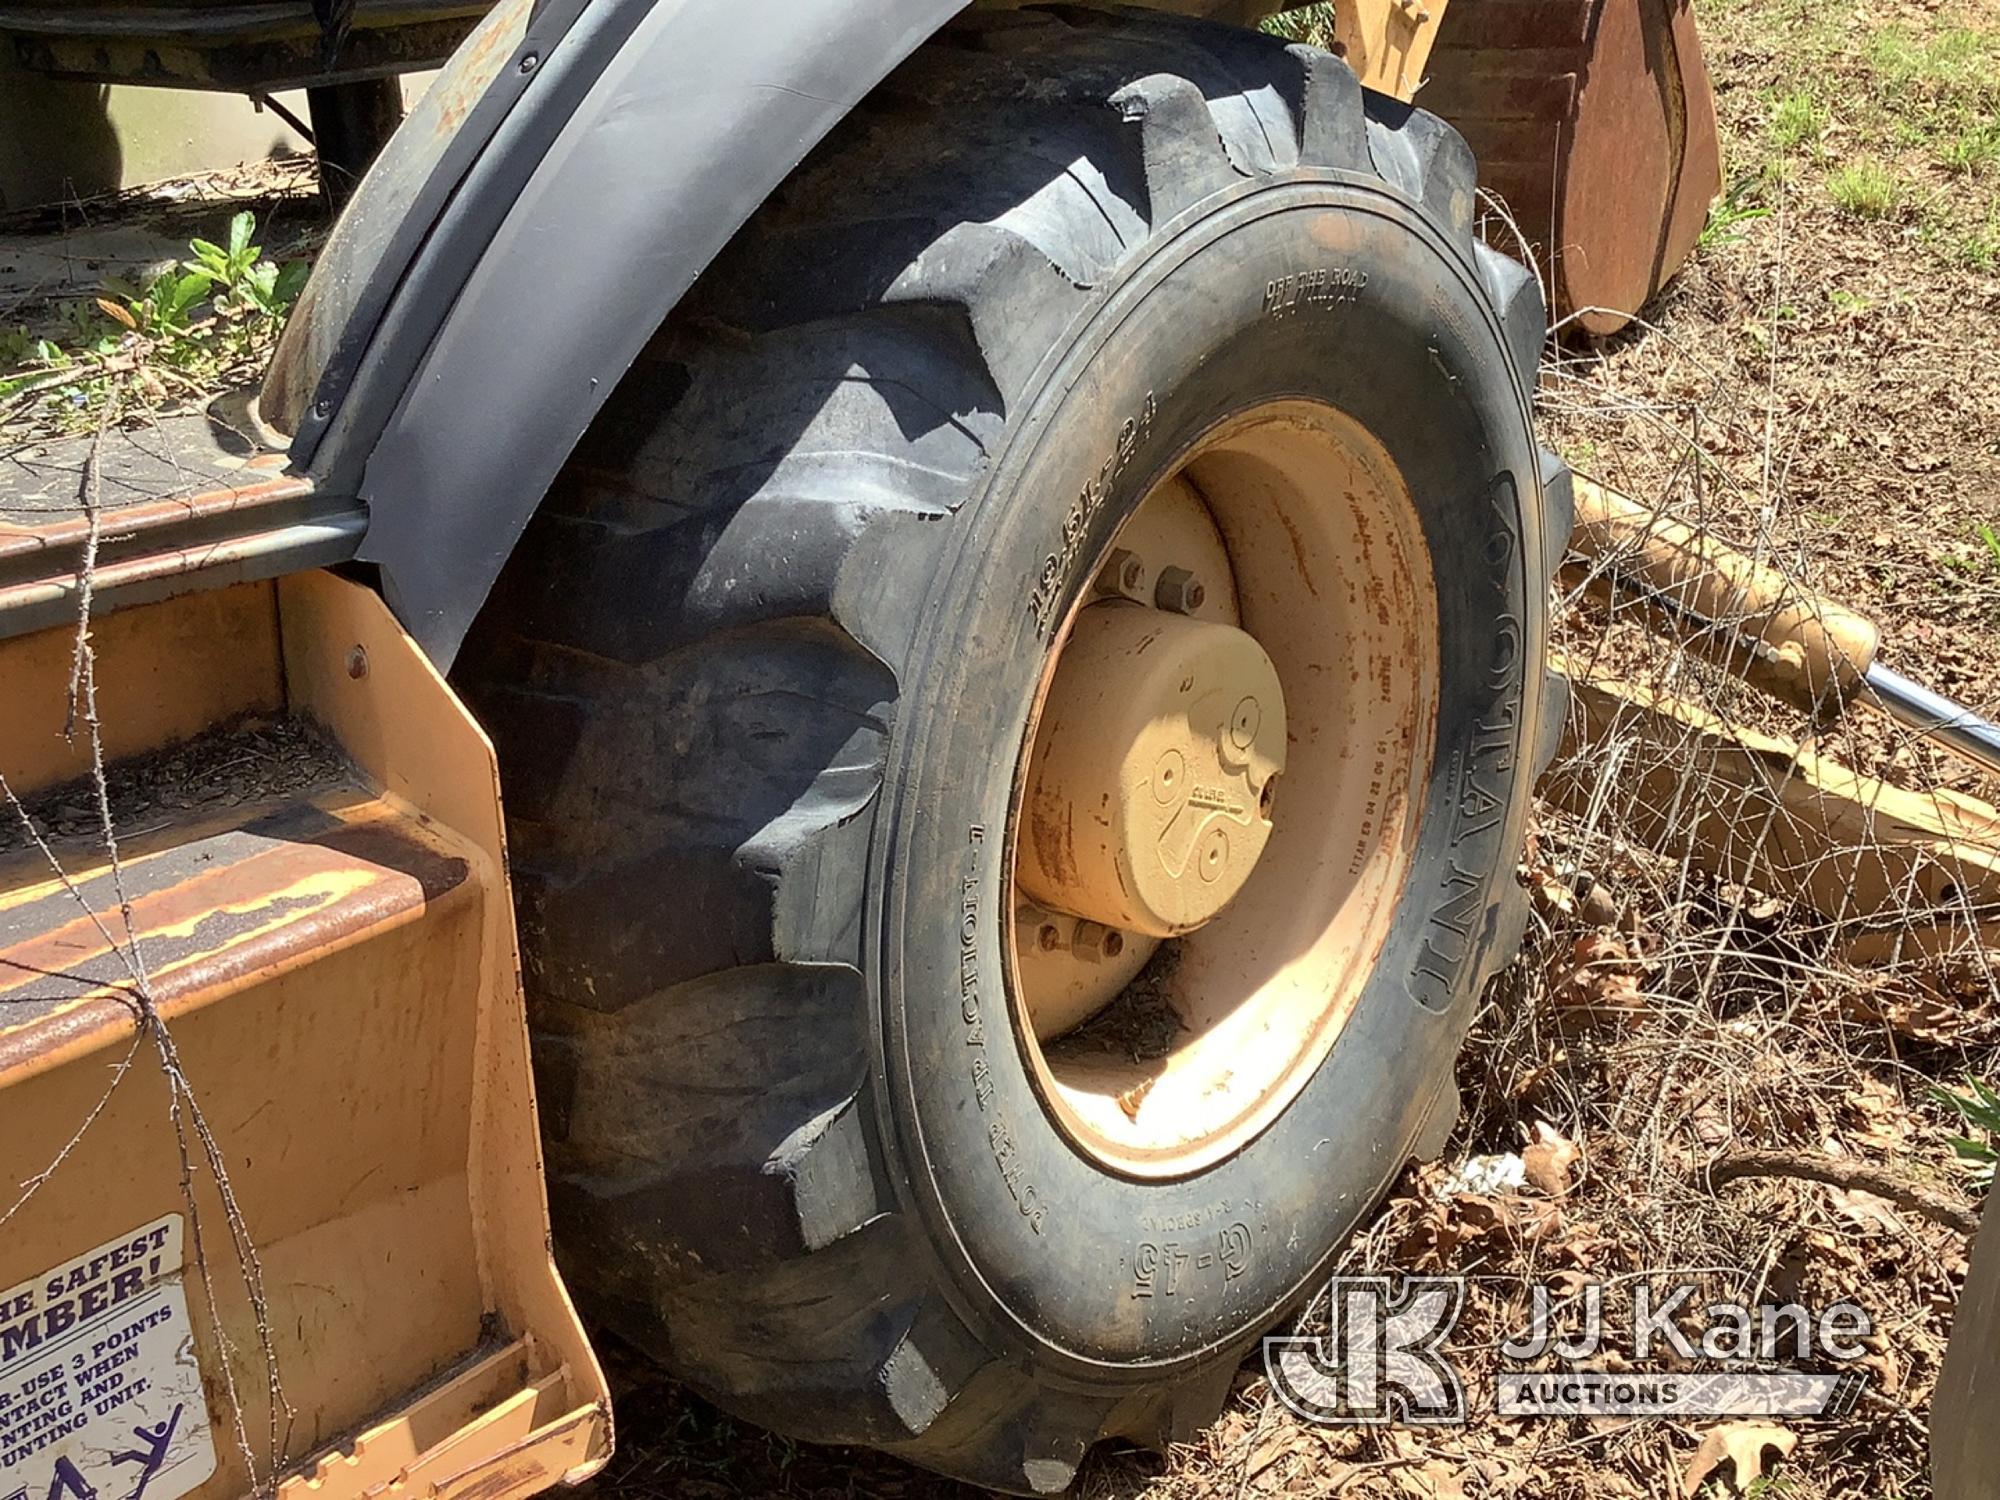 (Douglasville, GA) 2006 Case 580 Super M Series 2 Tractor Loader Backhoe Not Running Condition Unkno